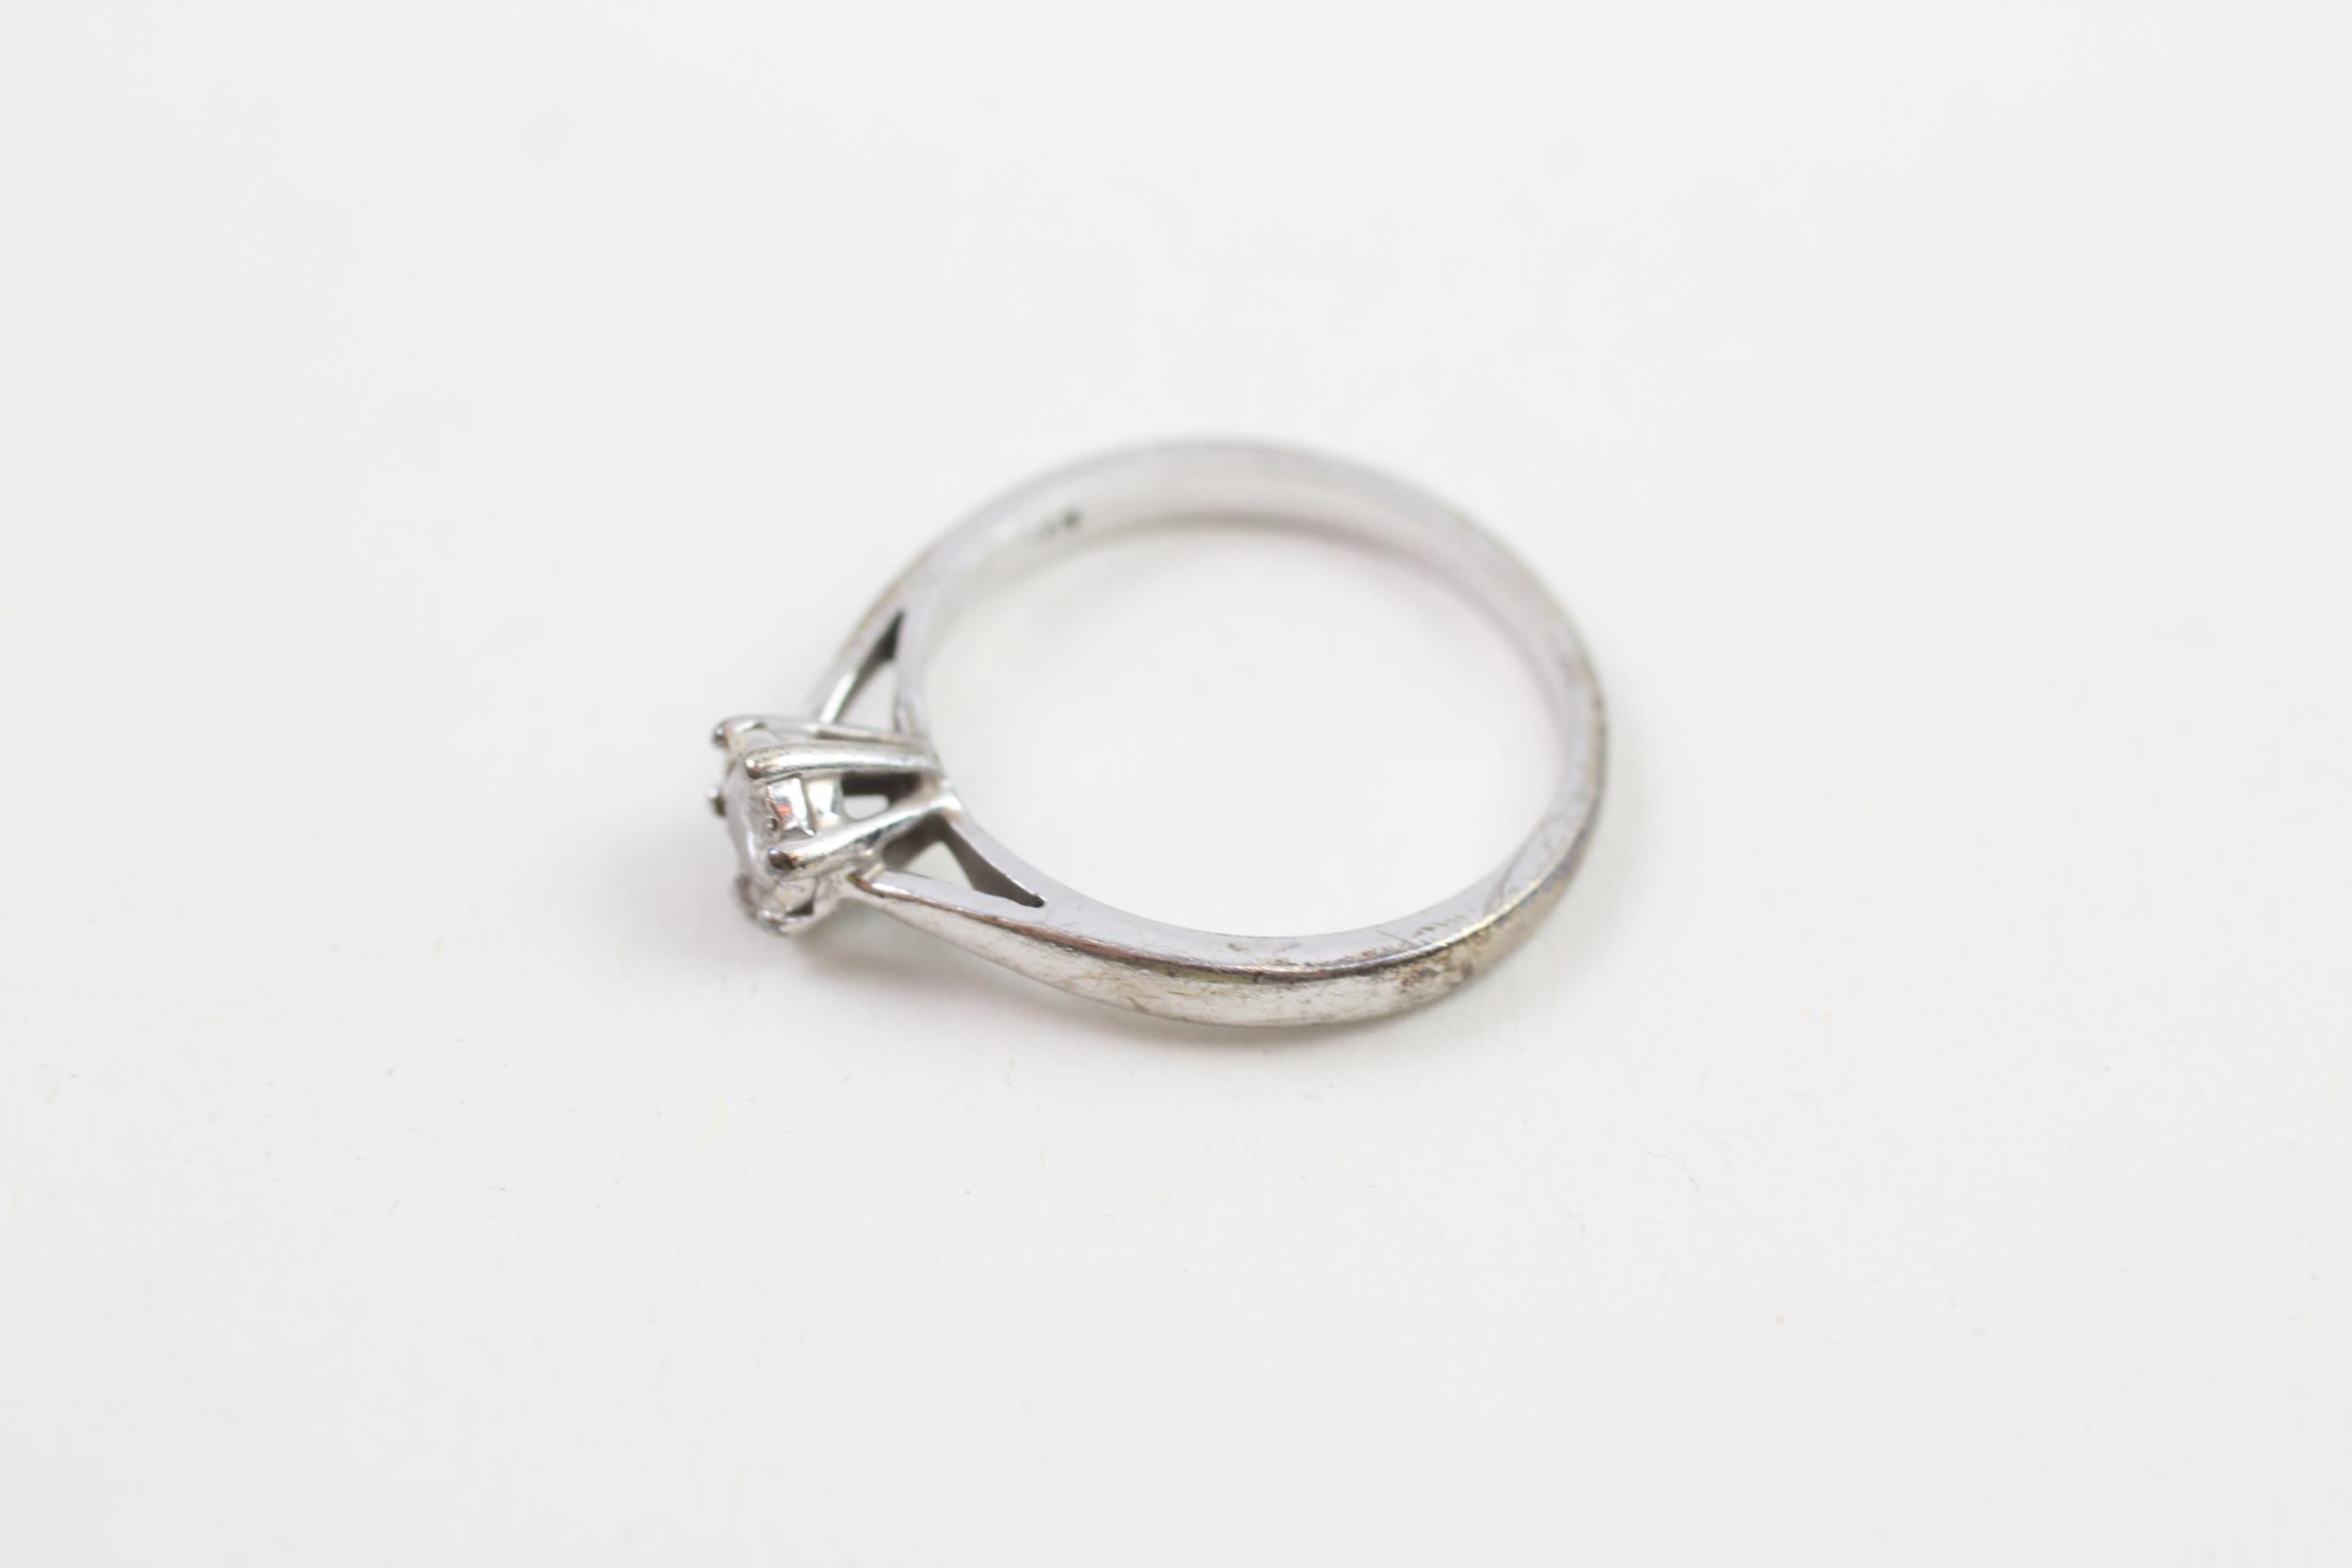 9ct white gold round brilliant cut diamond single stone ring (2.6g) Size N - Image 2 of 4